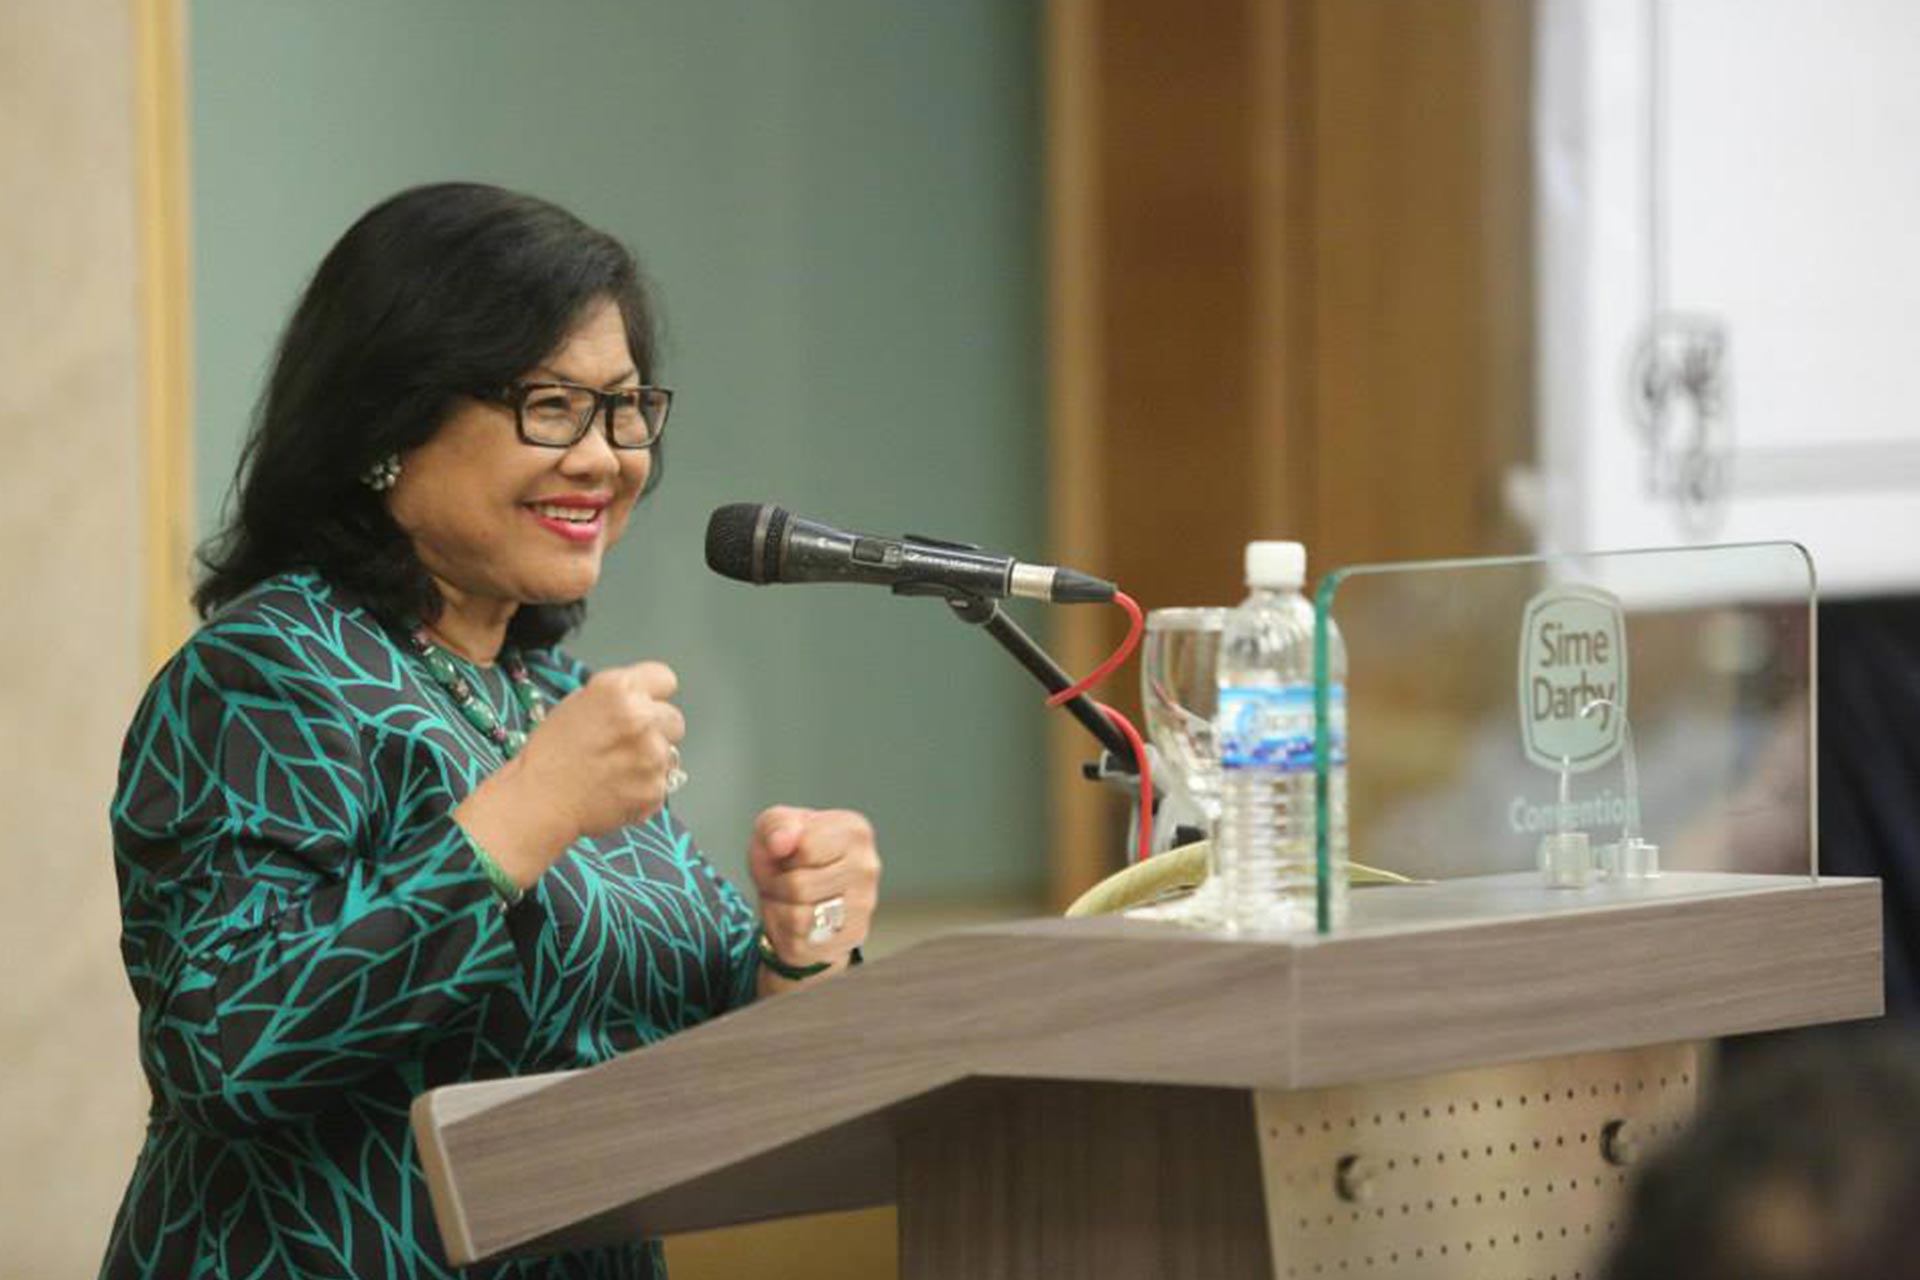 Dinner Talk by YB Tan Sri Dato’ Seri Rafidah Aziz – Harvard Business School